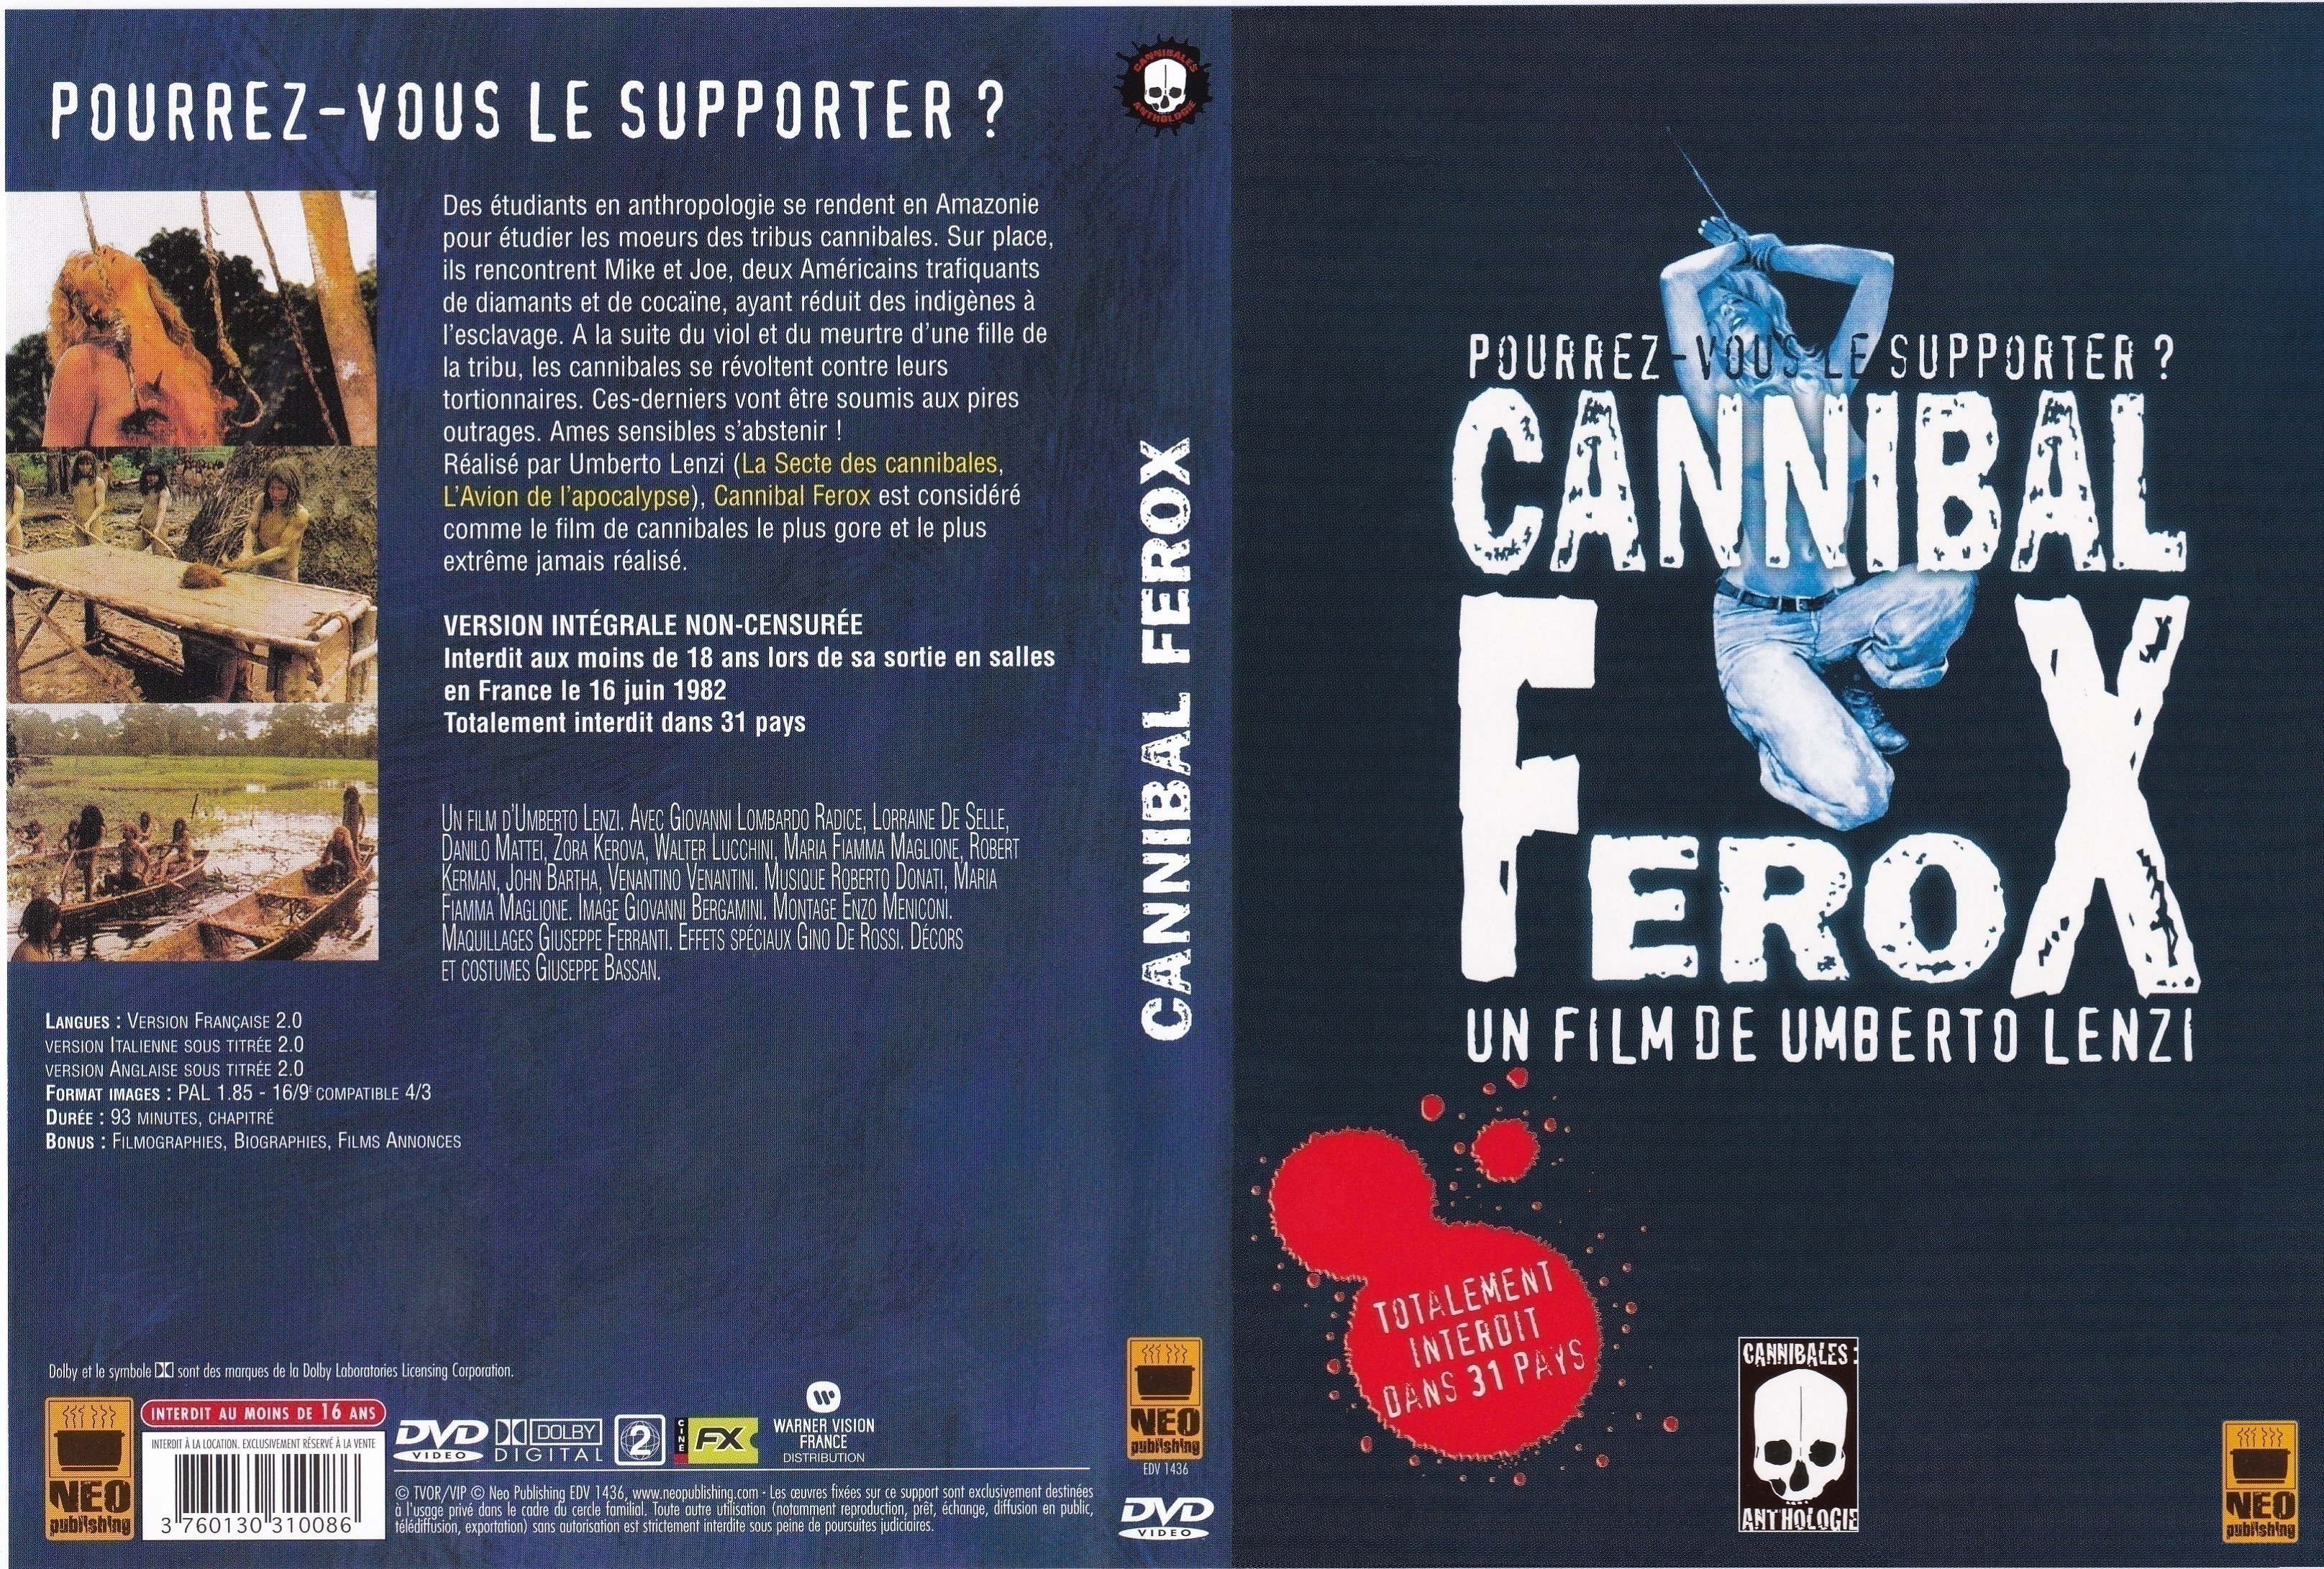 Jaquette DVD Cannibal Ferox v3